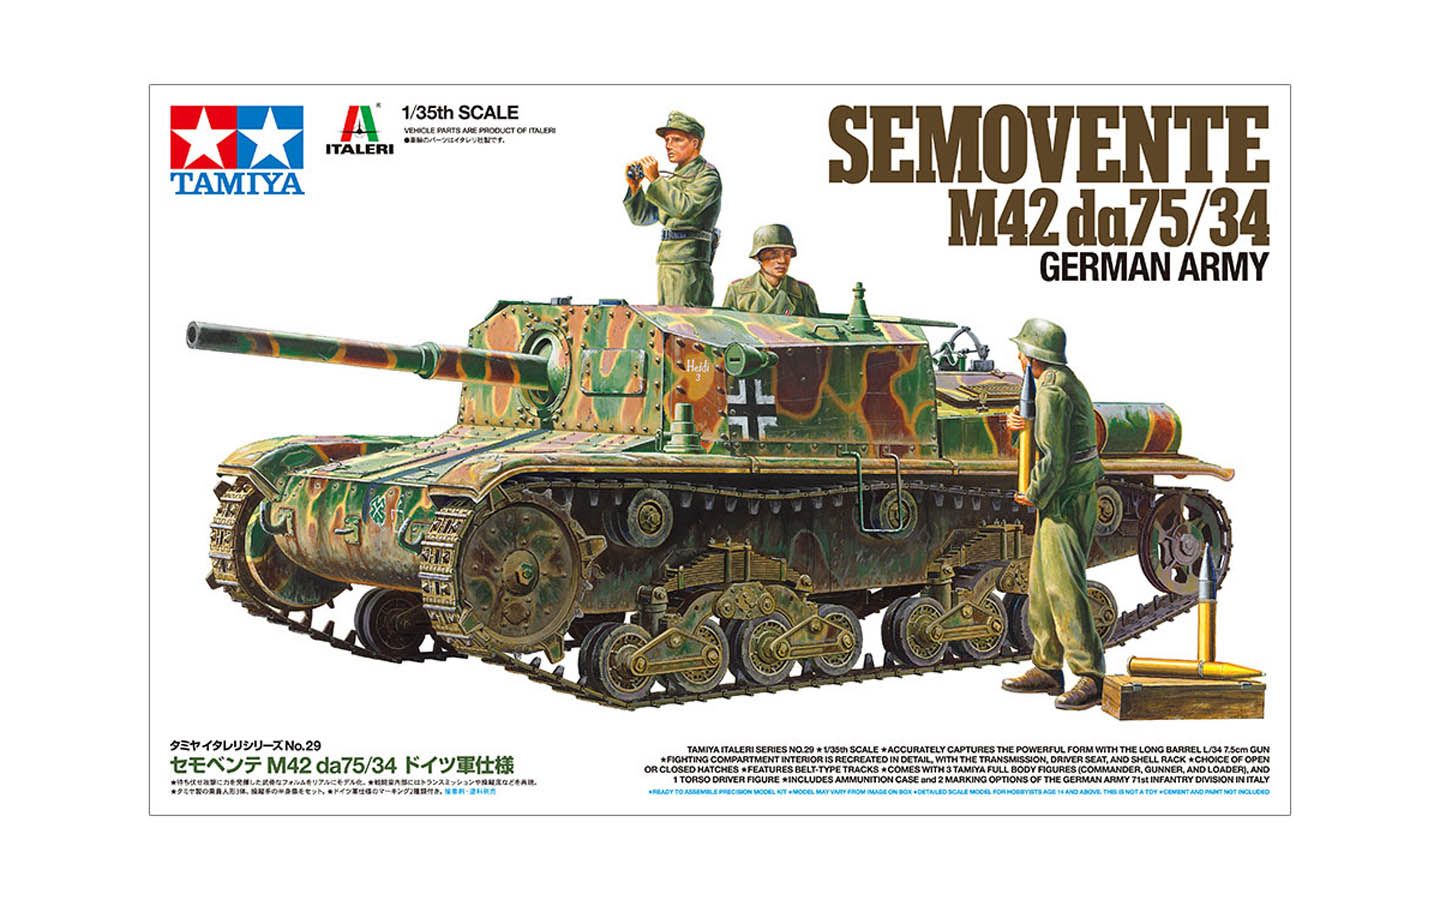 Tamiya 1/35 Scale Semovente M42 da 75/34 German Army Model Kit